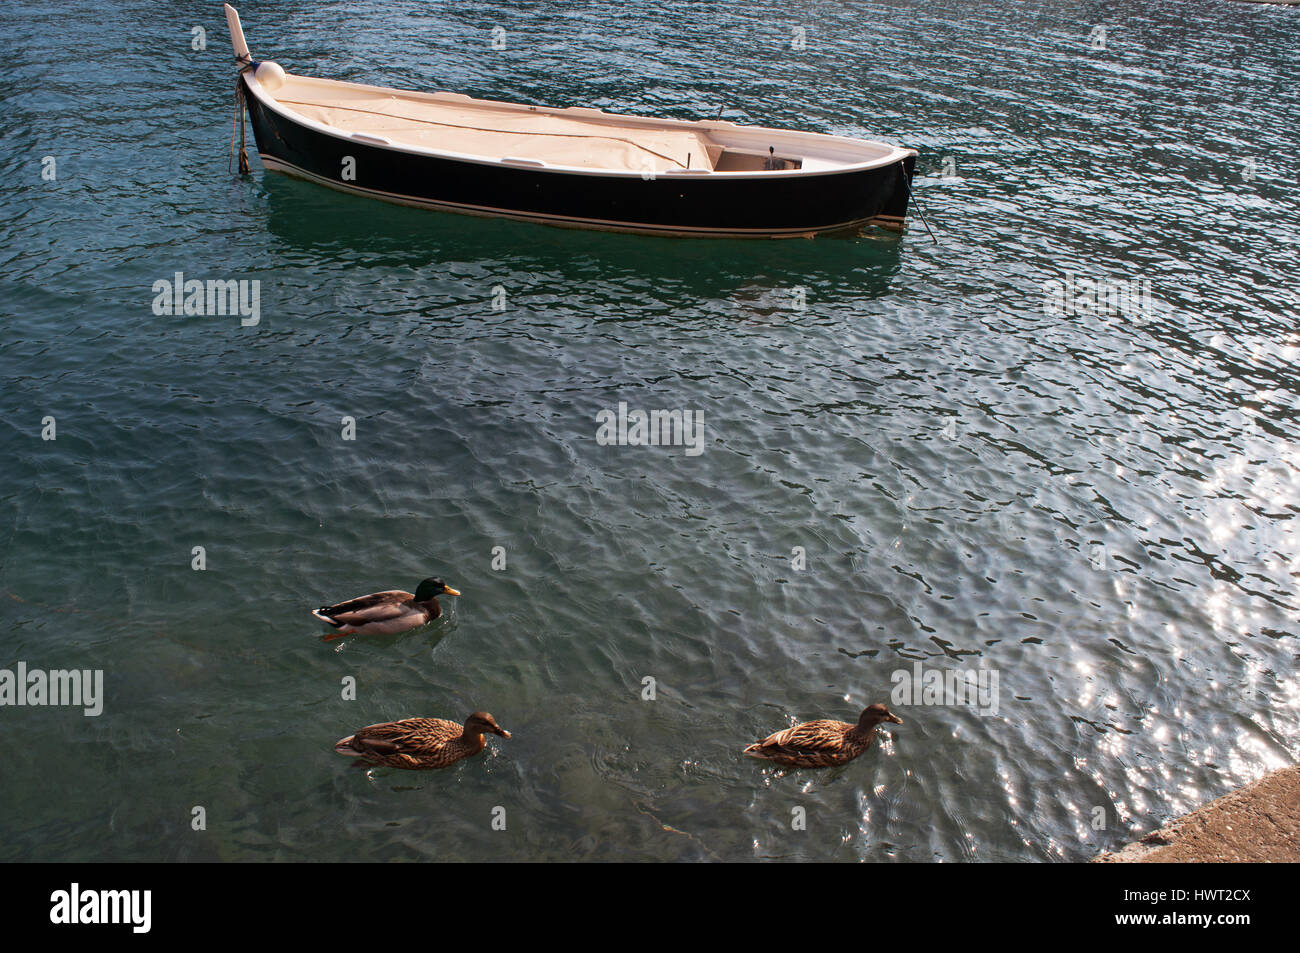 Portofino, Italy, nature and animals: three sea ducks in the water and a fishing boat Stock Photo